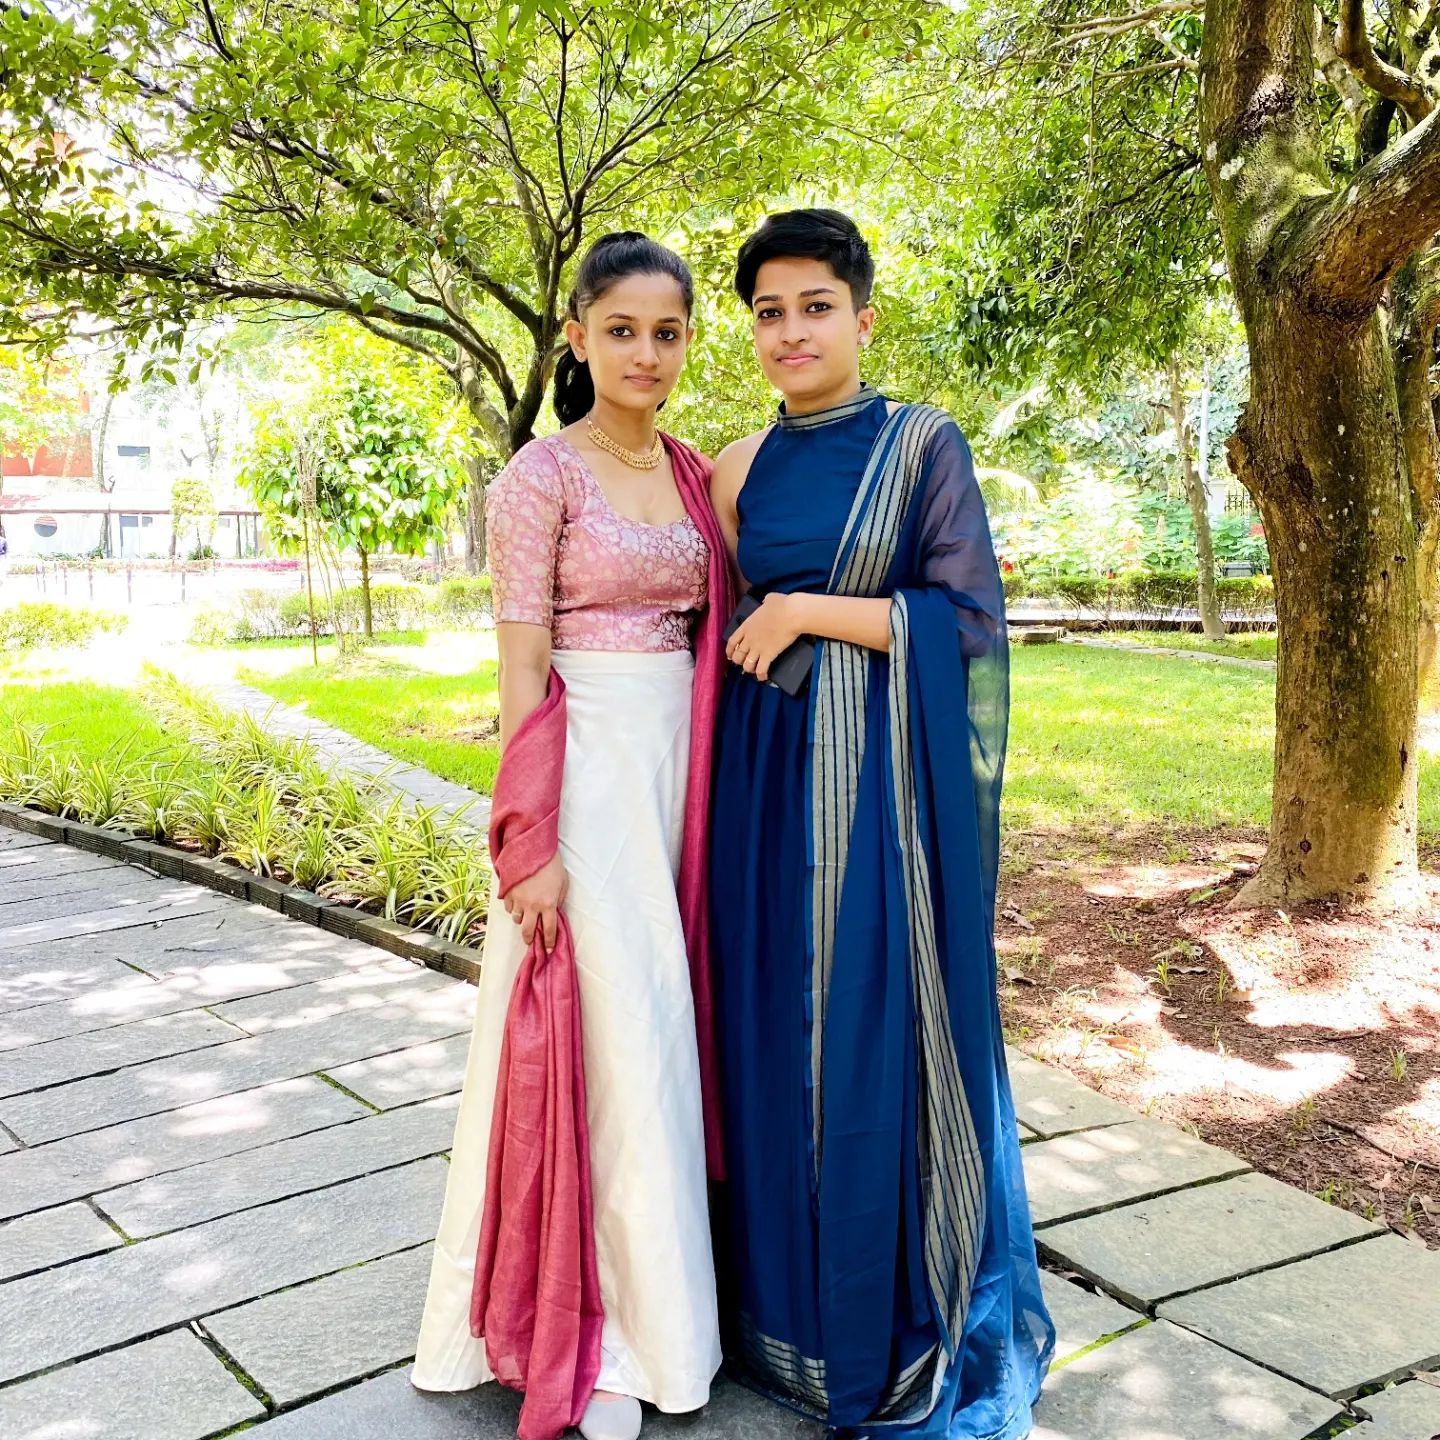 Kerala Lesbian Couple Wedding Photoshoot Went Viral On Social Media Loksatta